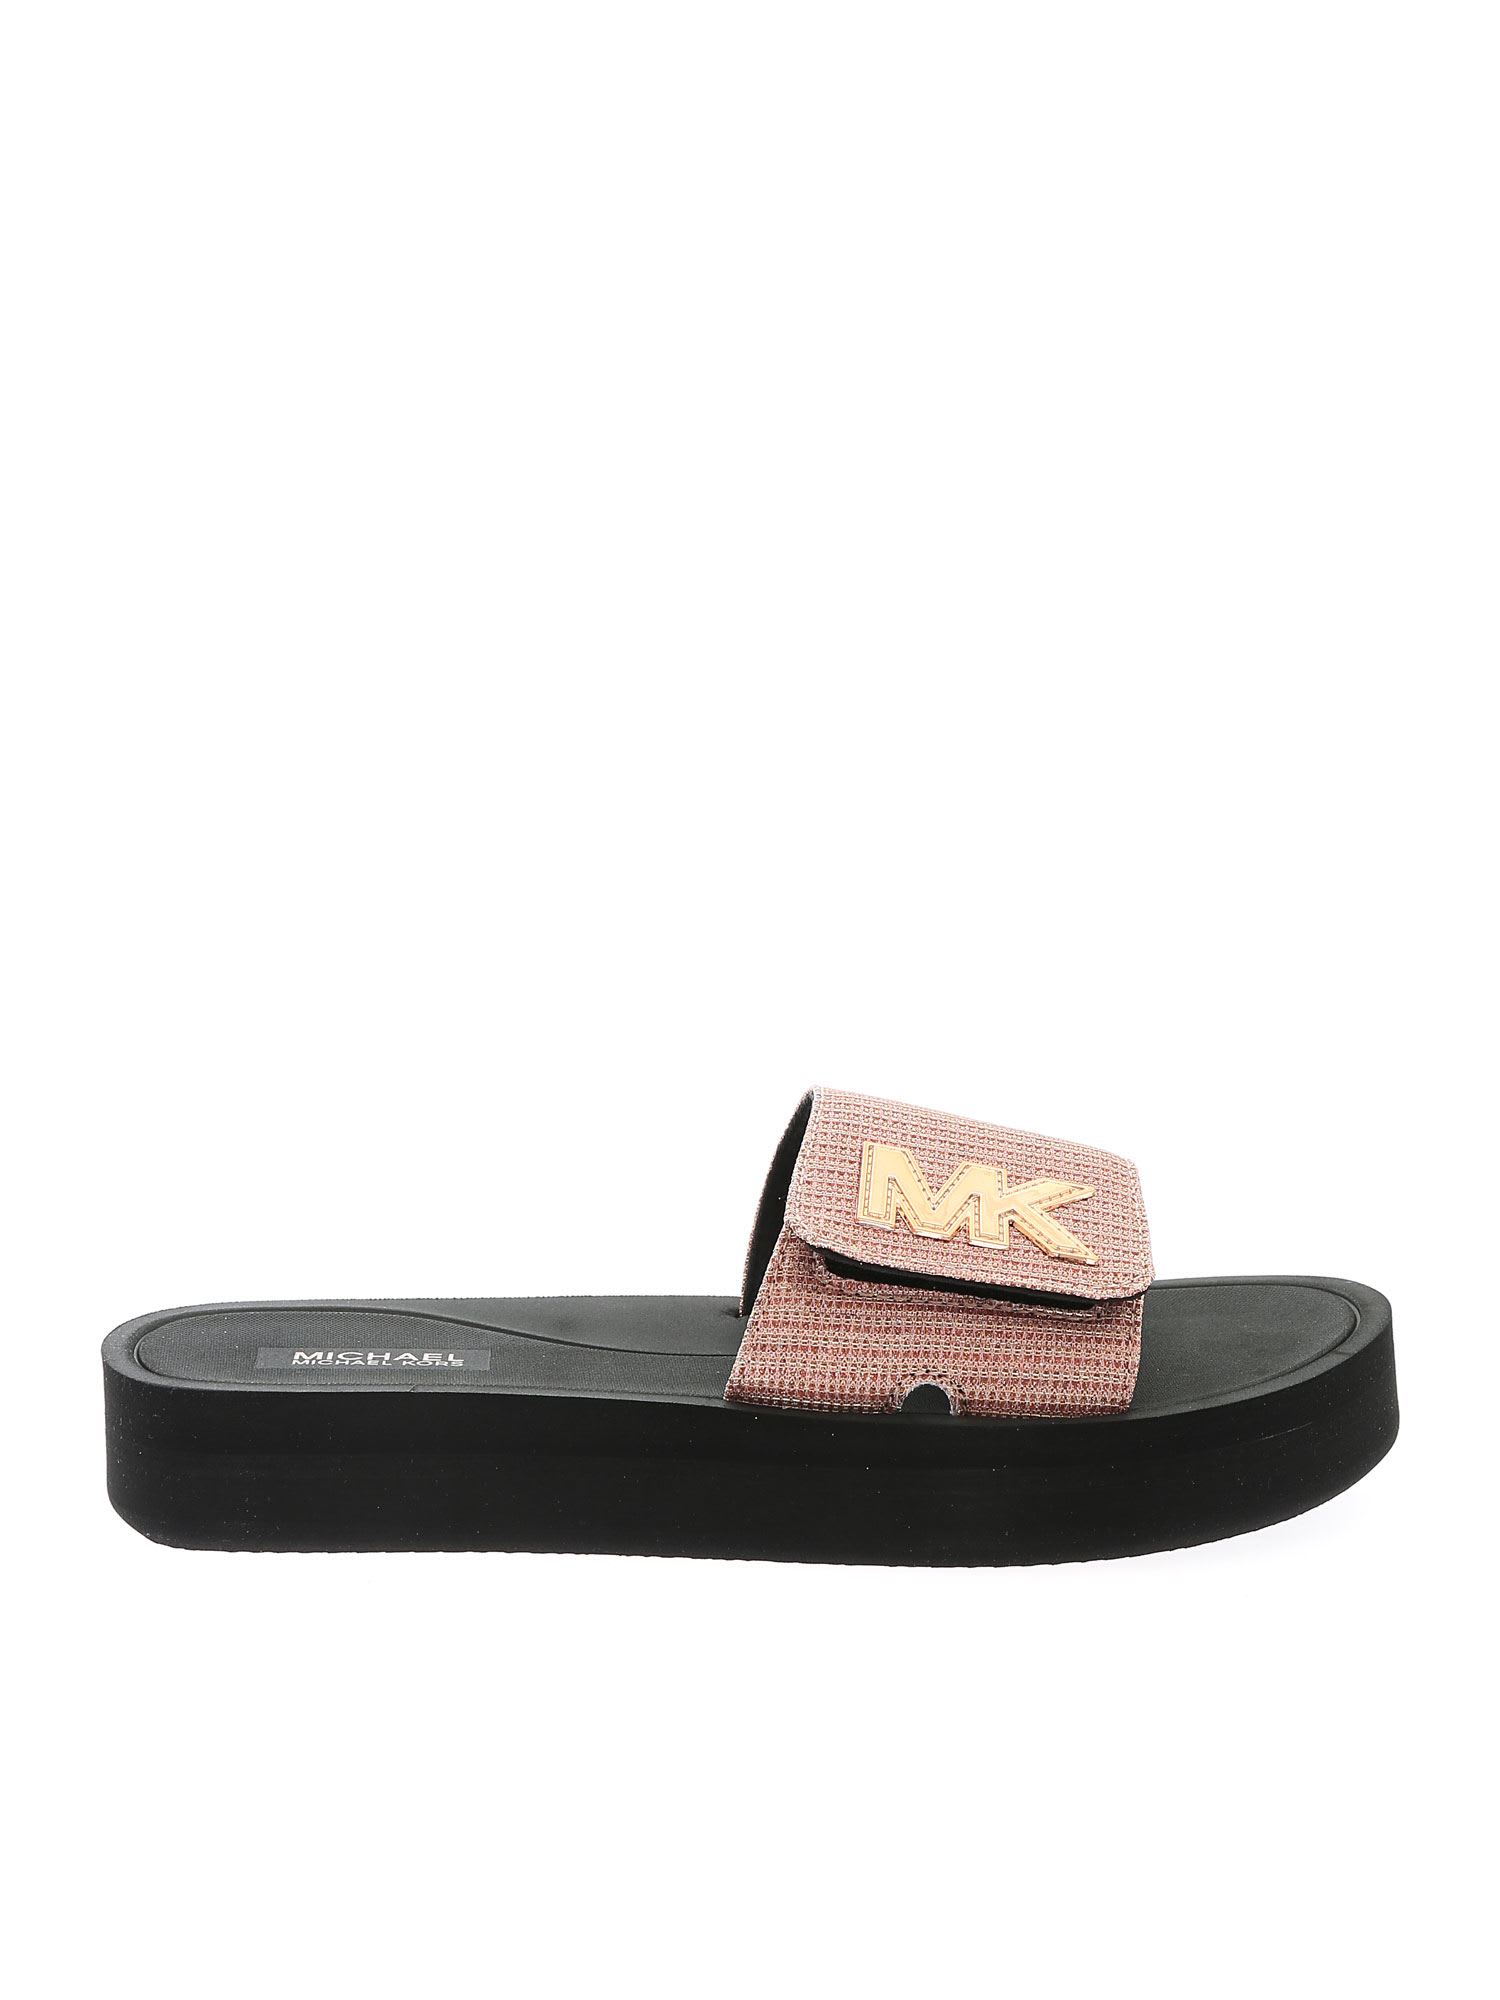 Buy MICHAEL Michael Kors Slippers online, shop MICHAEL Michael Kors shoes with free shipping